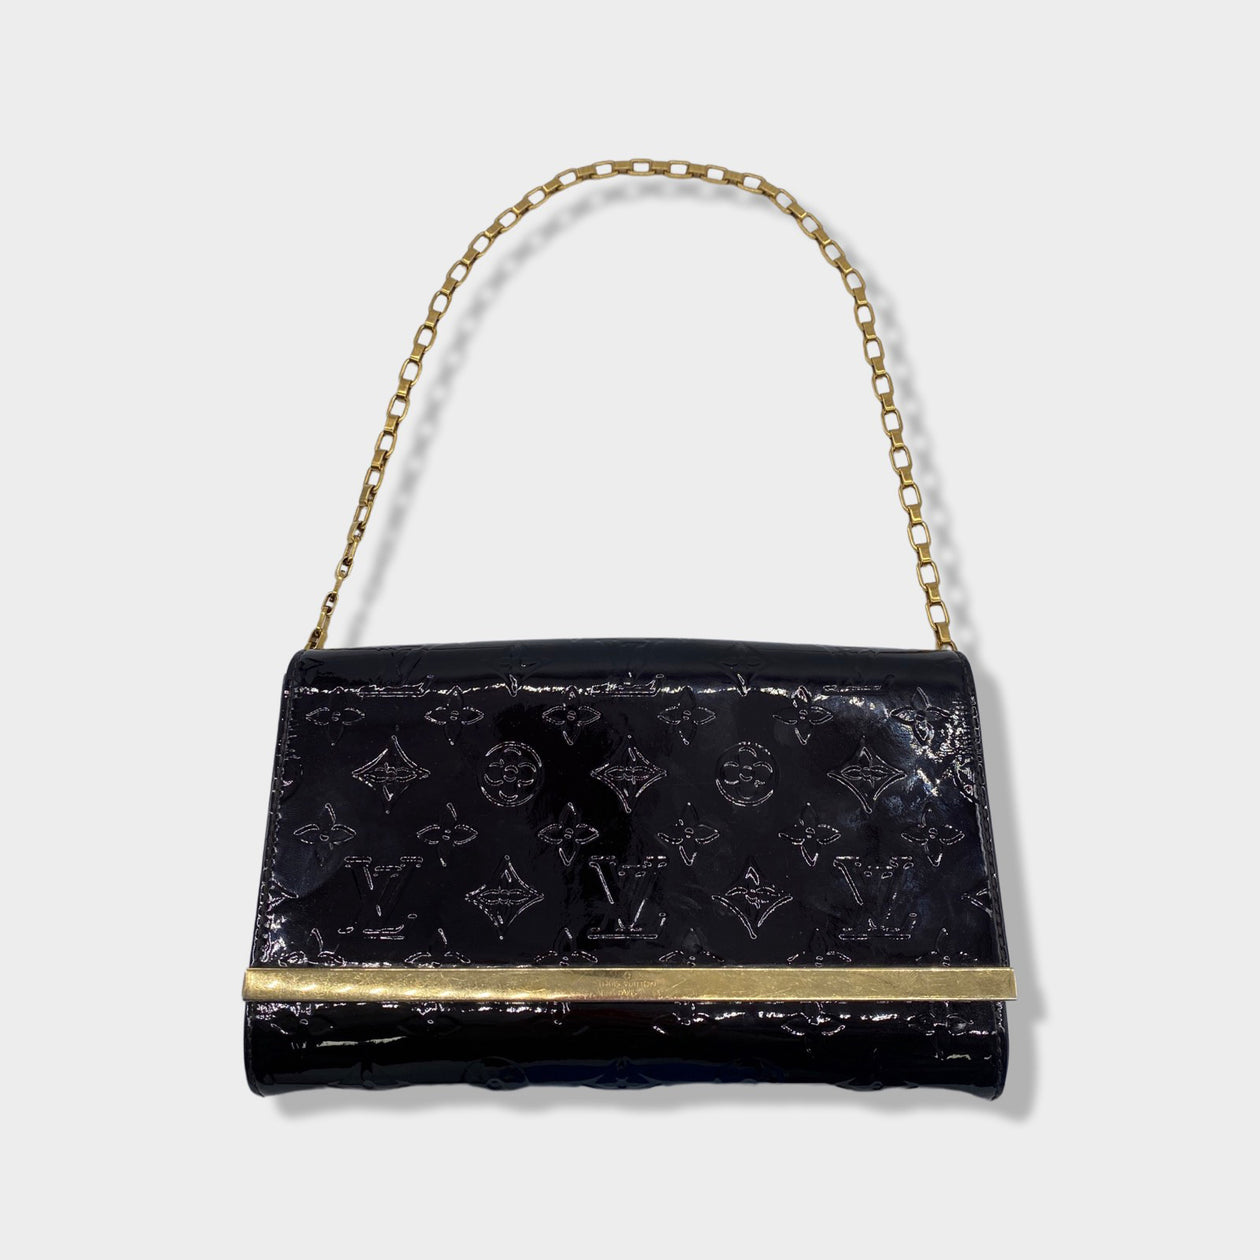 Louis Vuitton Purple Bags & Handbags for Women, Authenticity Guaranteed